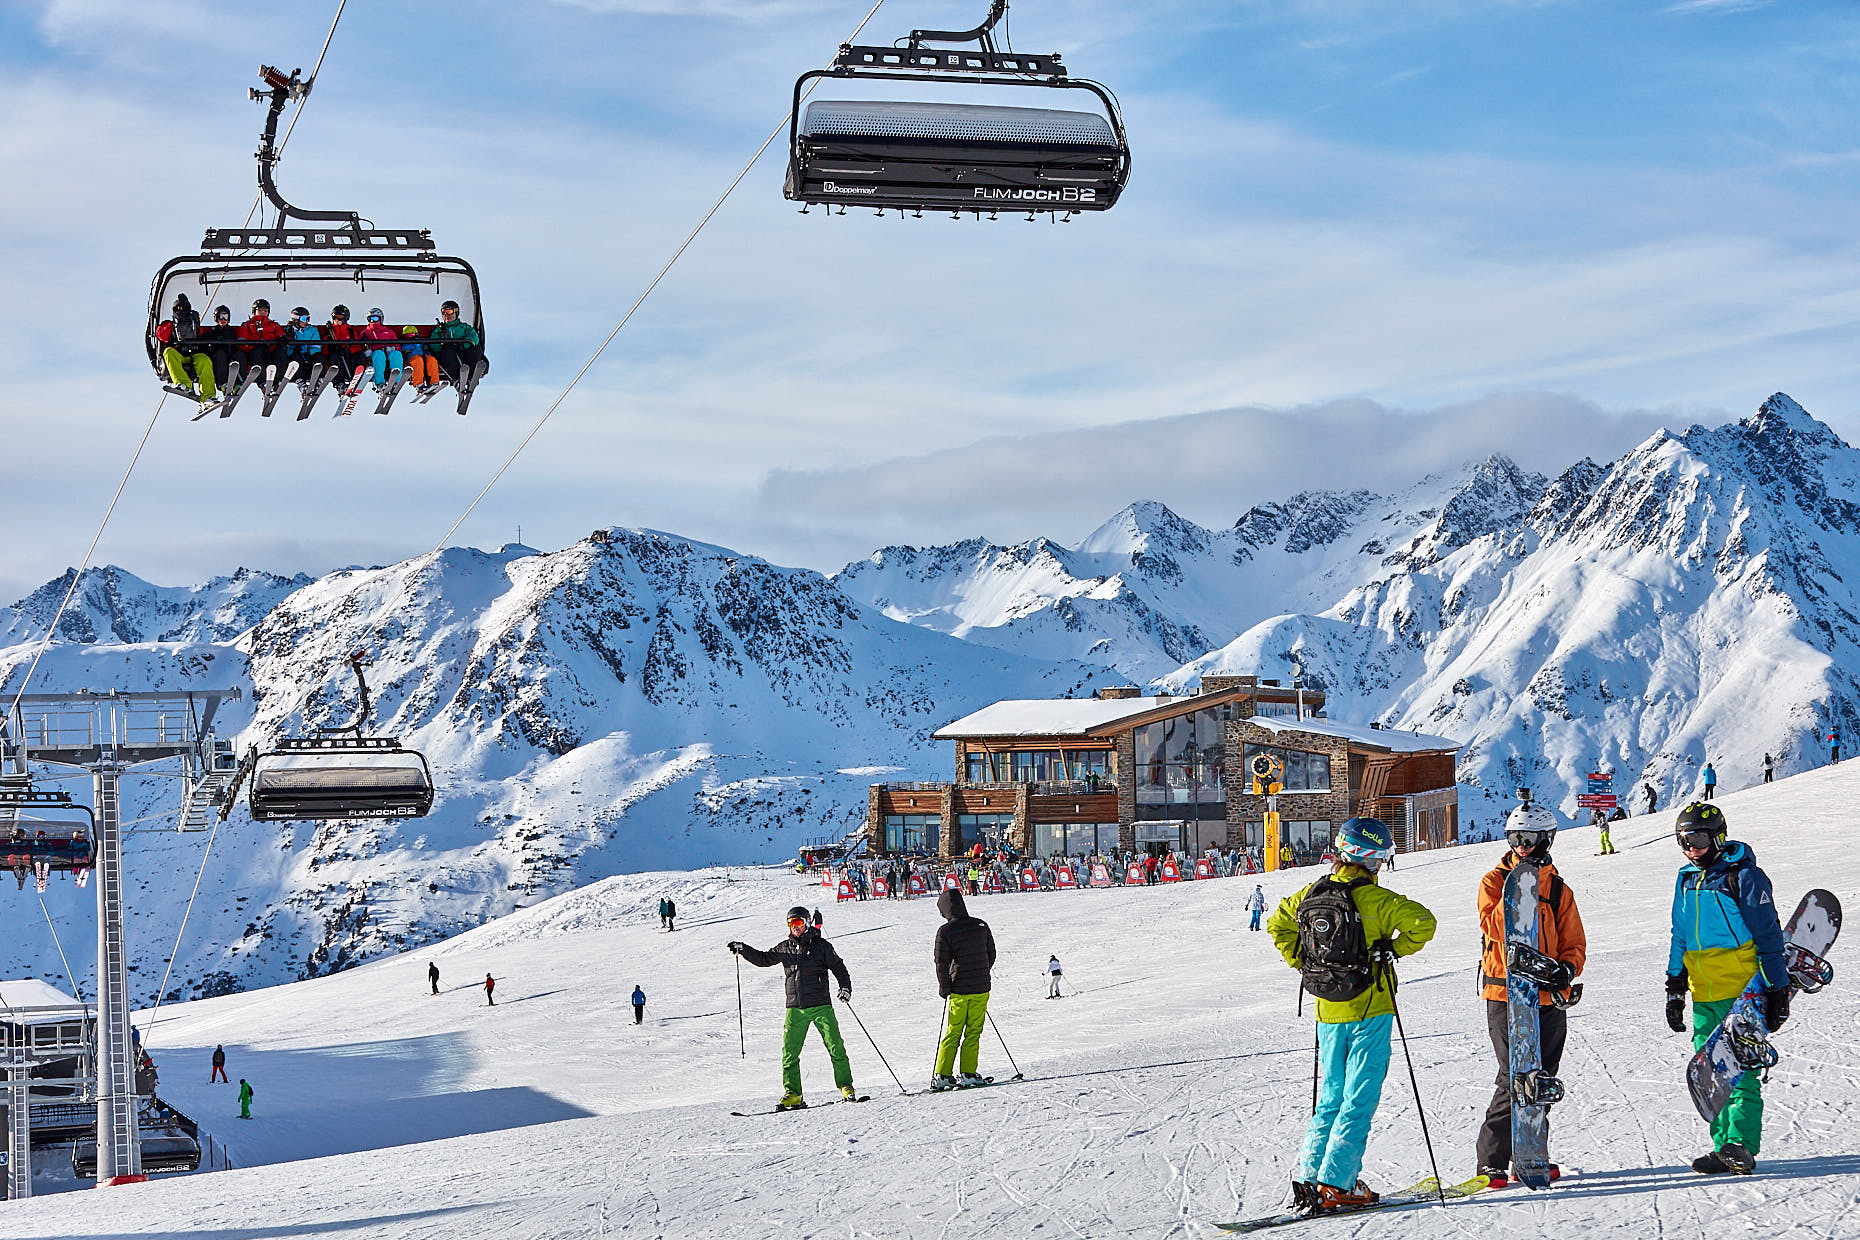 Ski Resort | Stefan Kuerzi - Tourism Photography